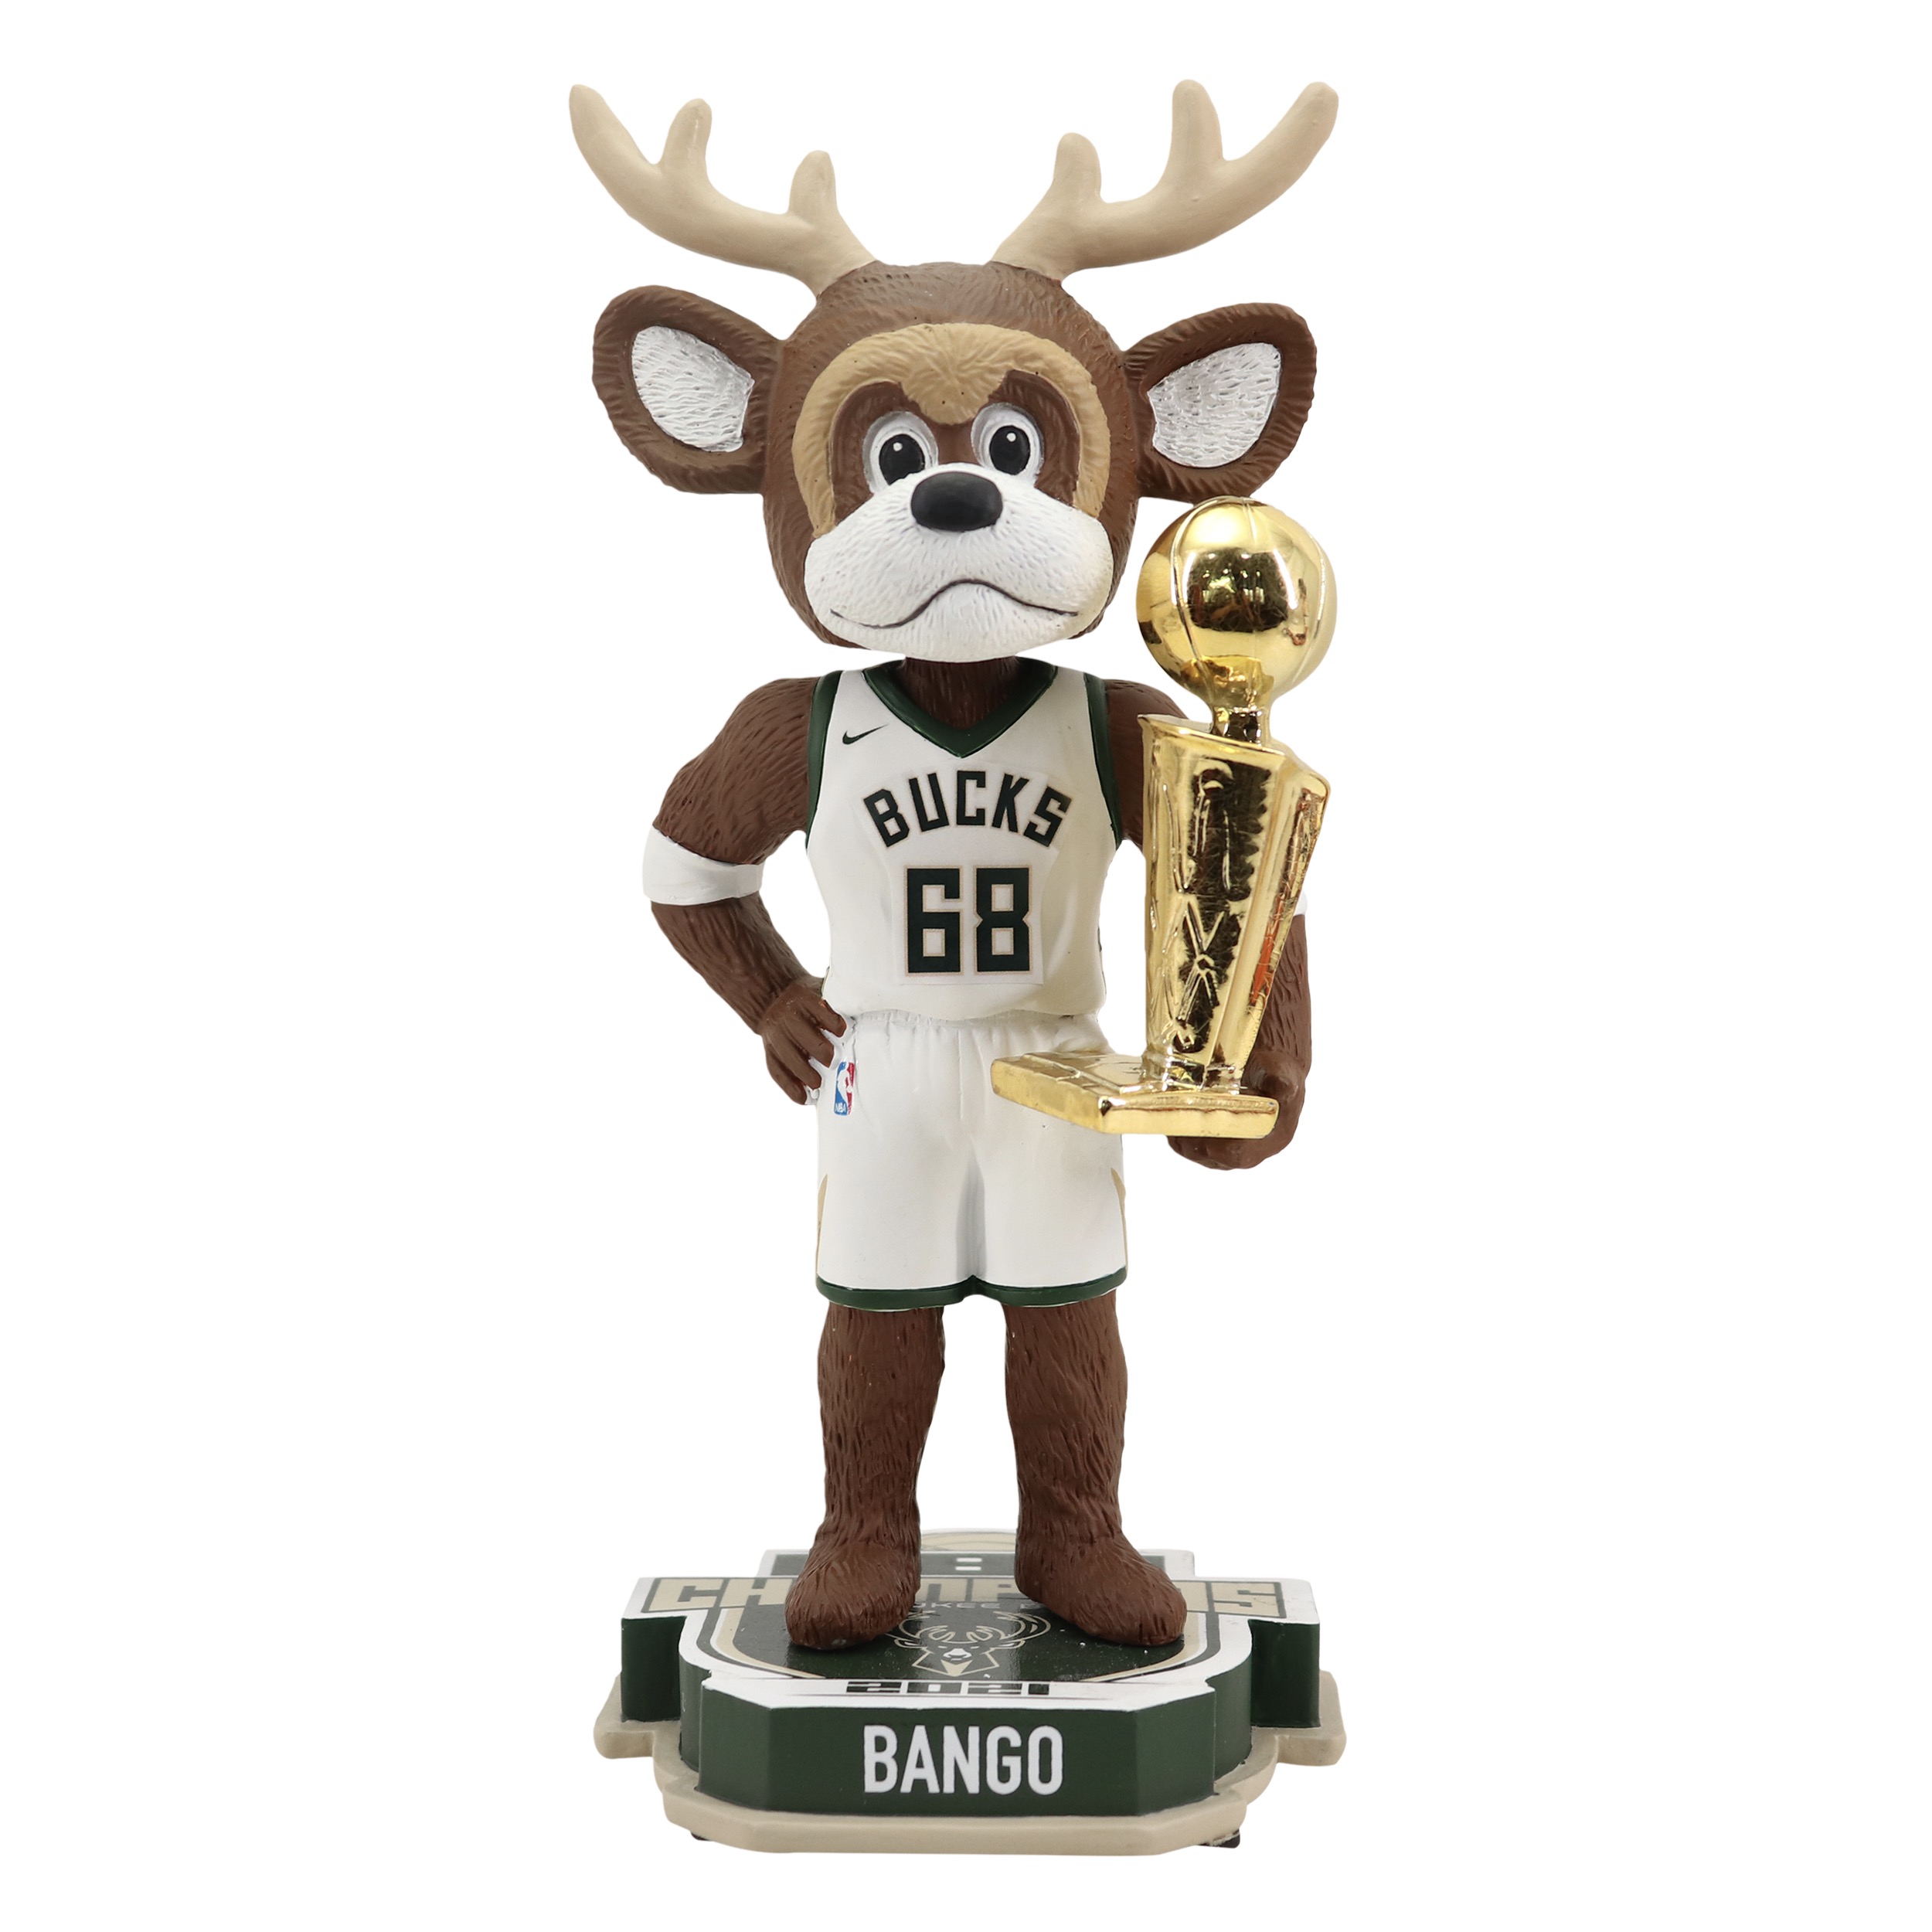 Foco Milwaukee Bucks Bango 2021 NBA Champions Mascot Bobblehead